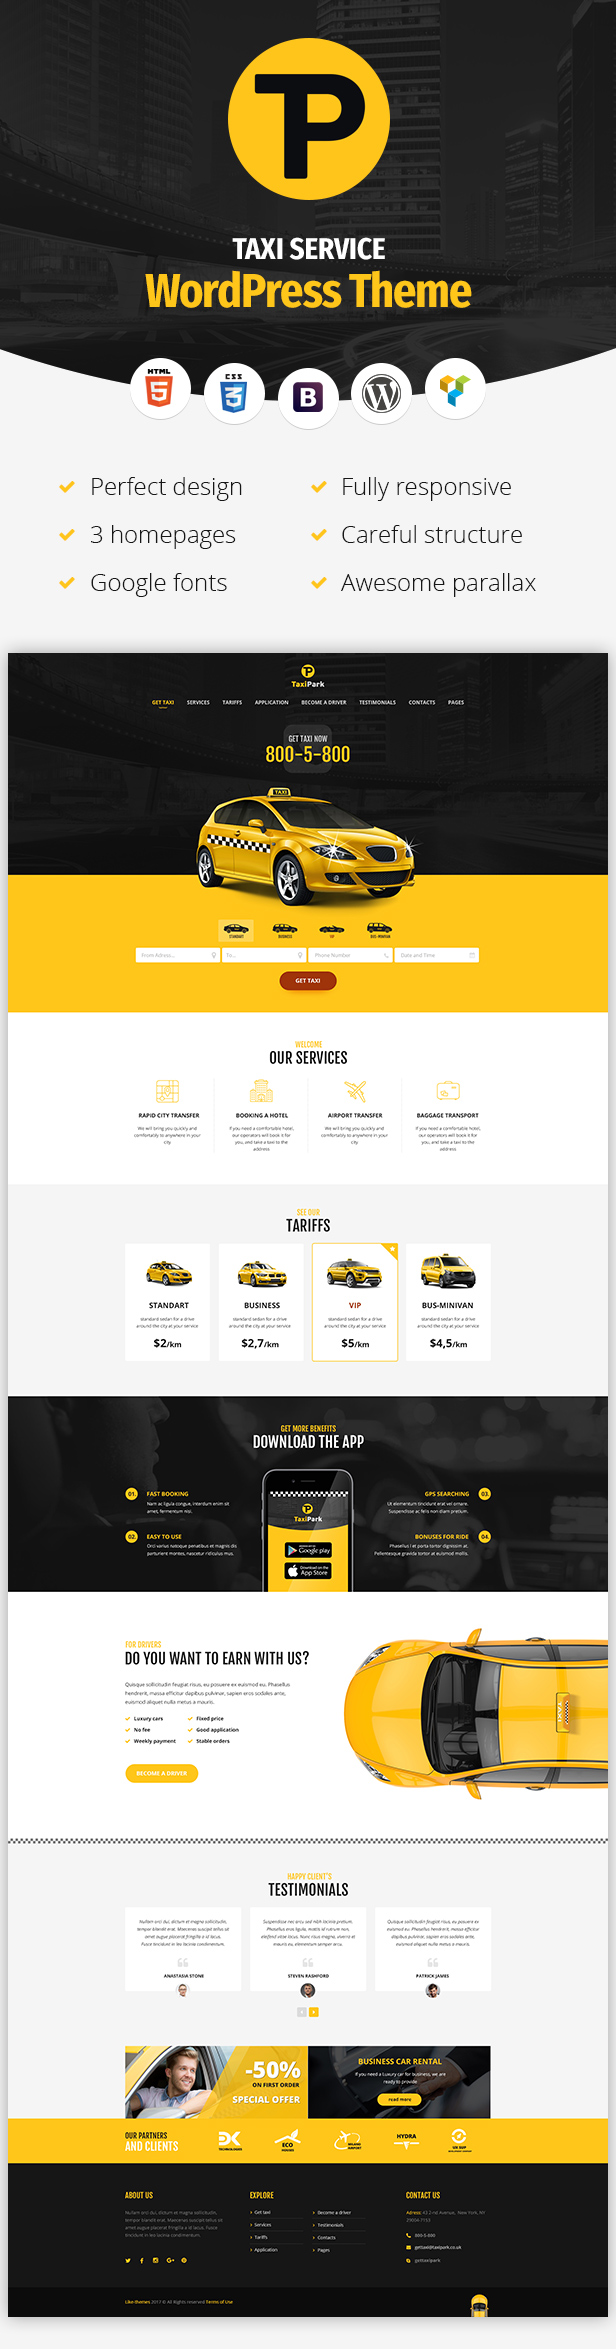 TaxiPark - Taxi Cab Service Company WordPress Theme - 3